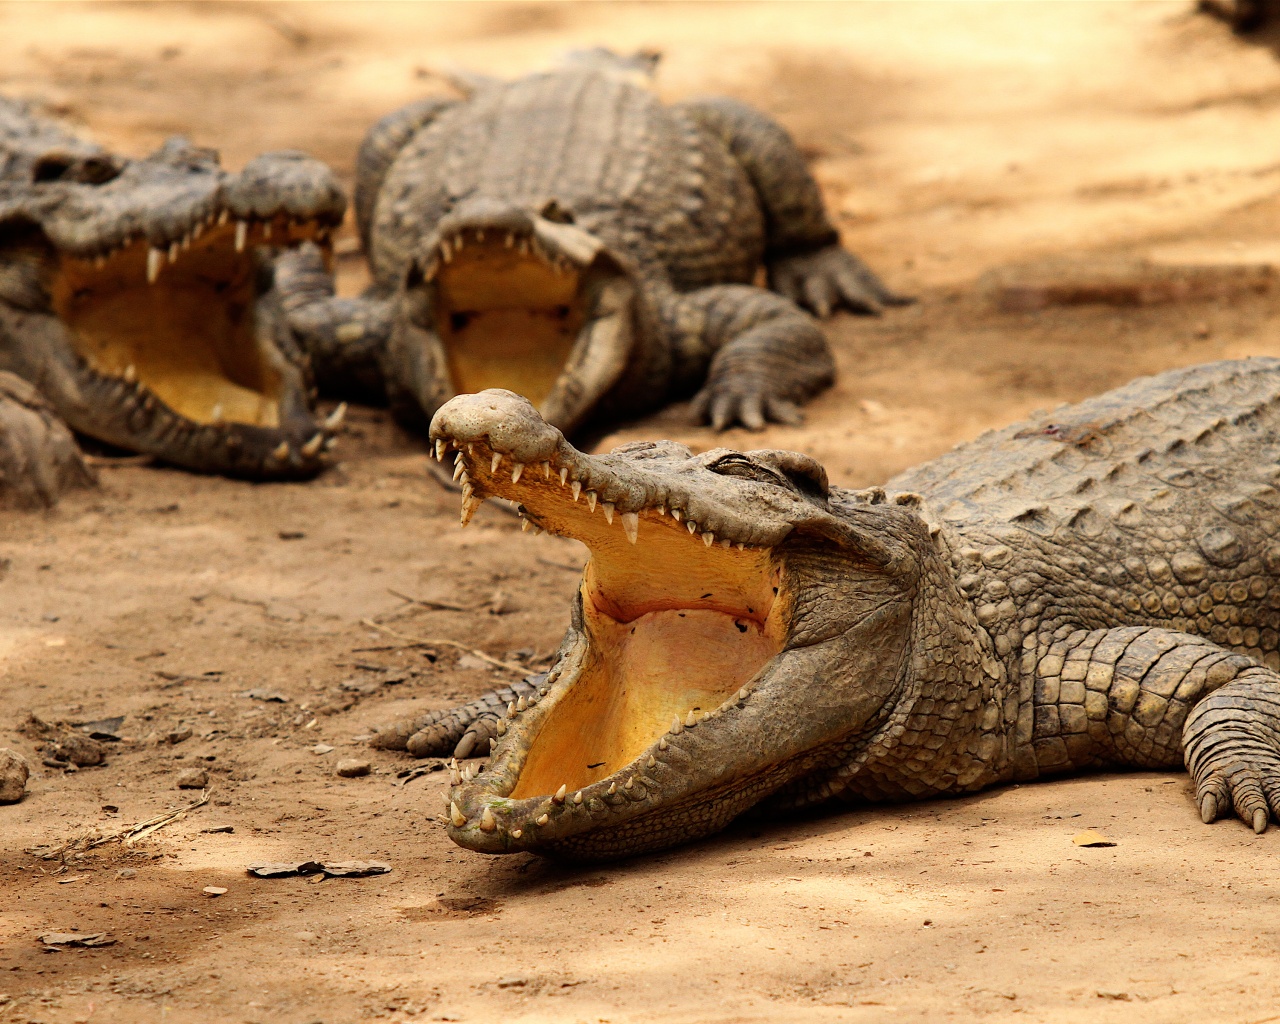 Crocodiles Bask In The Sun